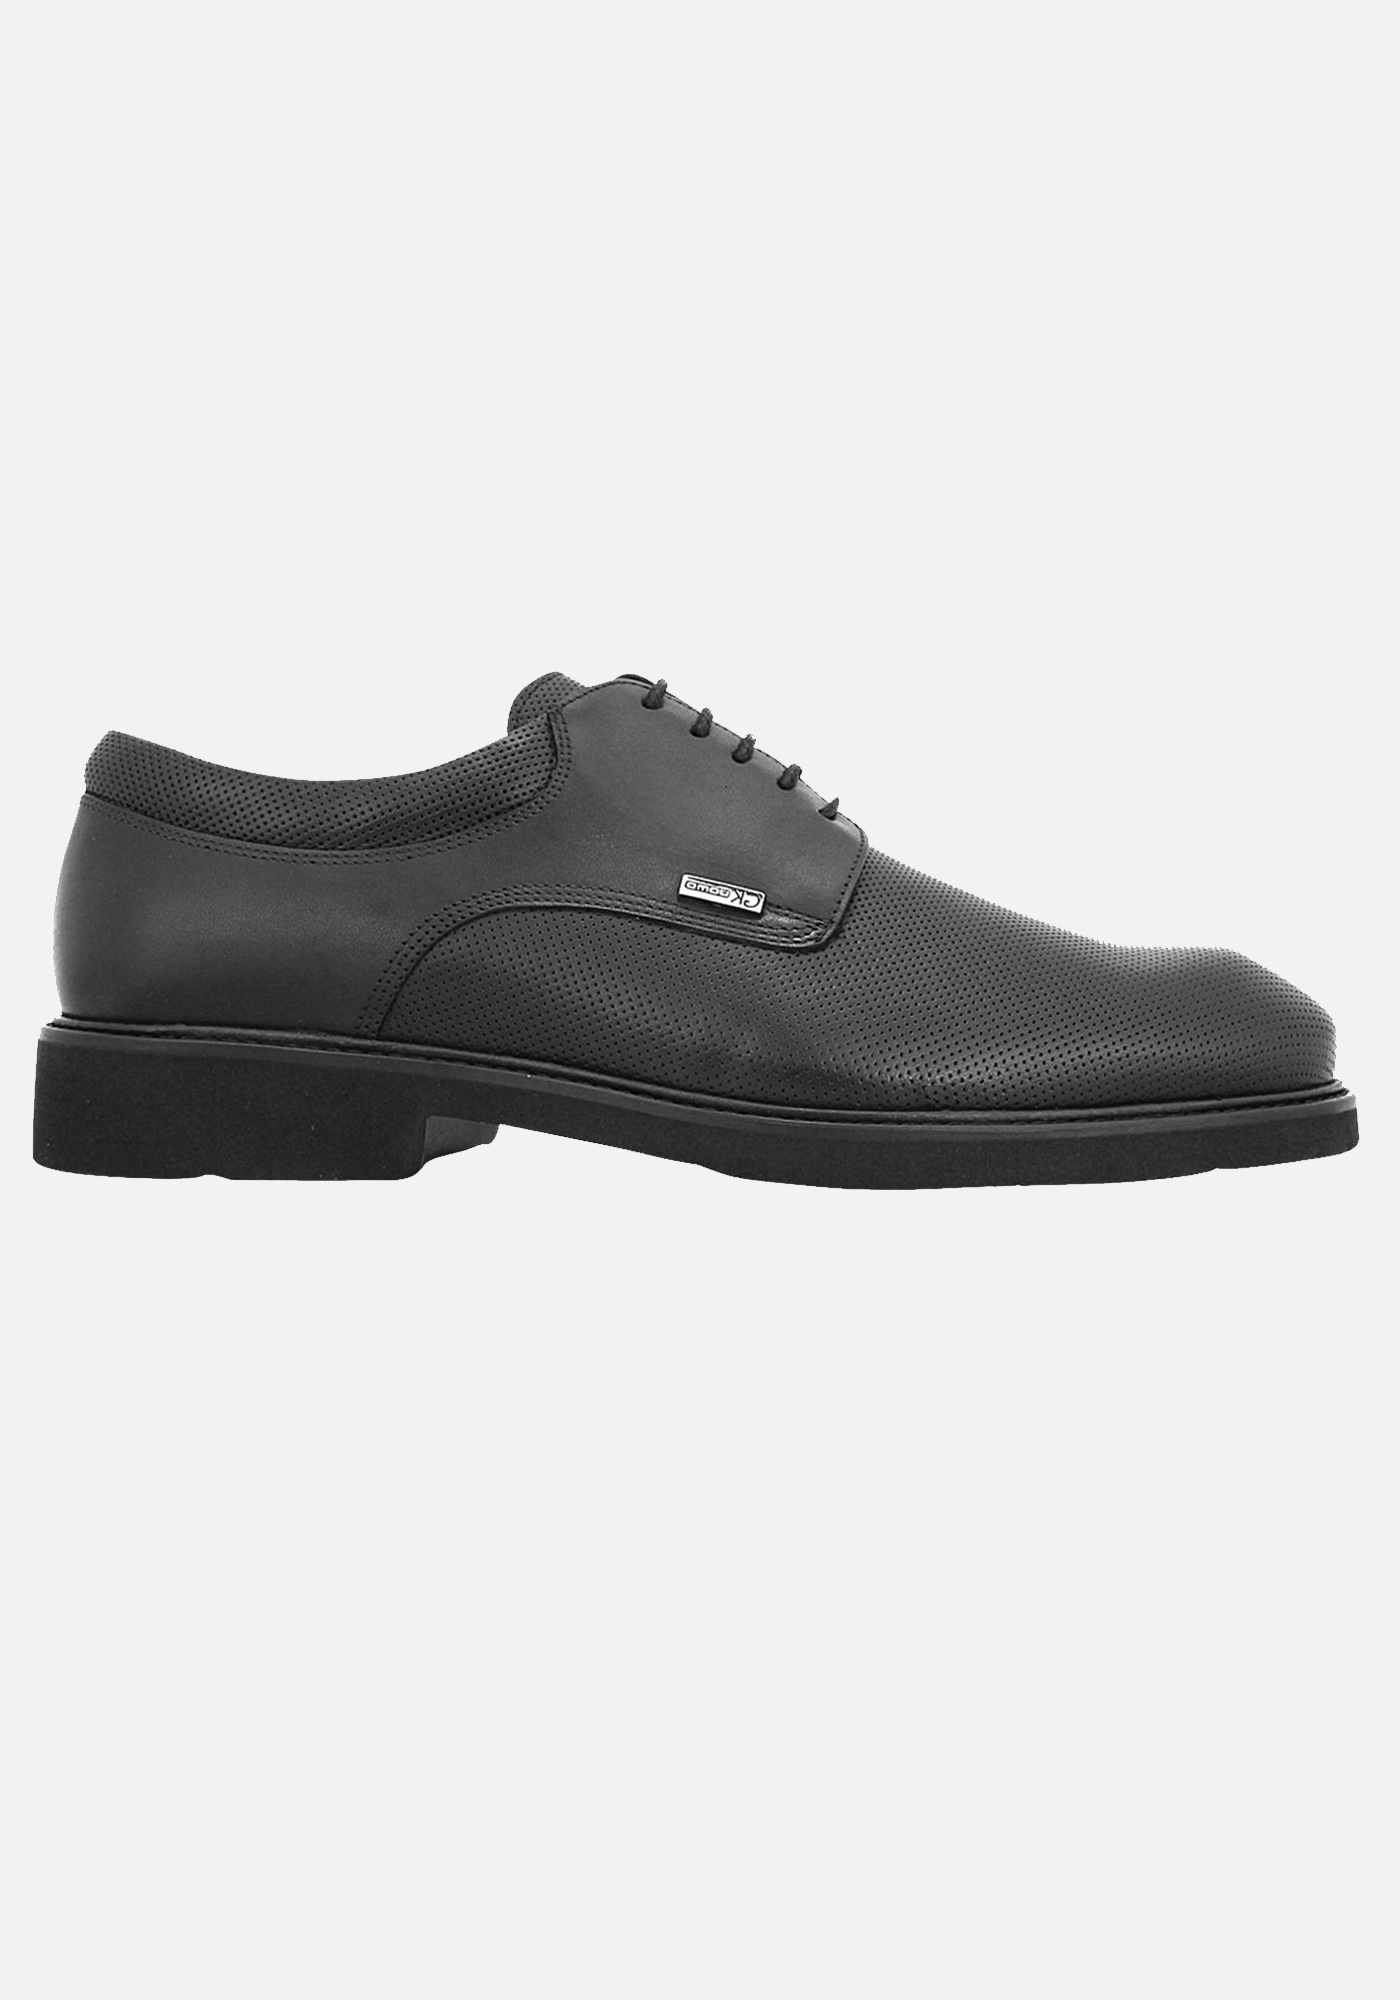 GK Uomo Δερμάτινα Παπούτσια της σειράς Seron - 21202 34 Black 10103